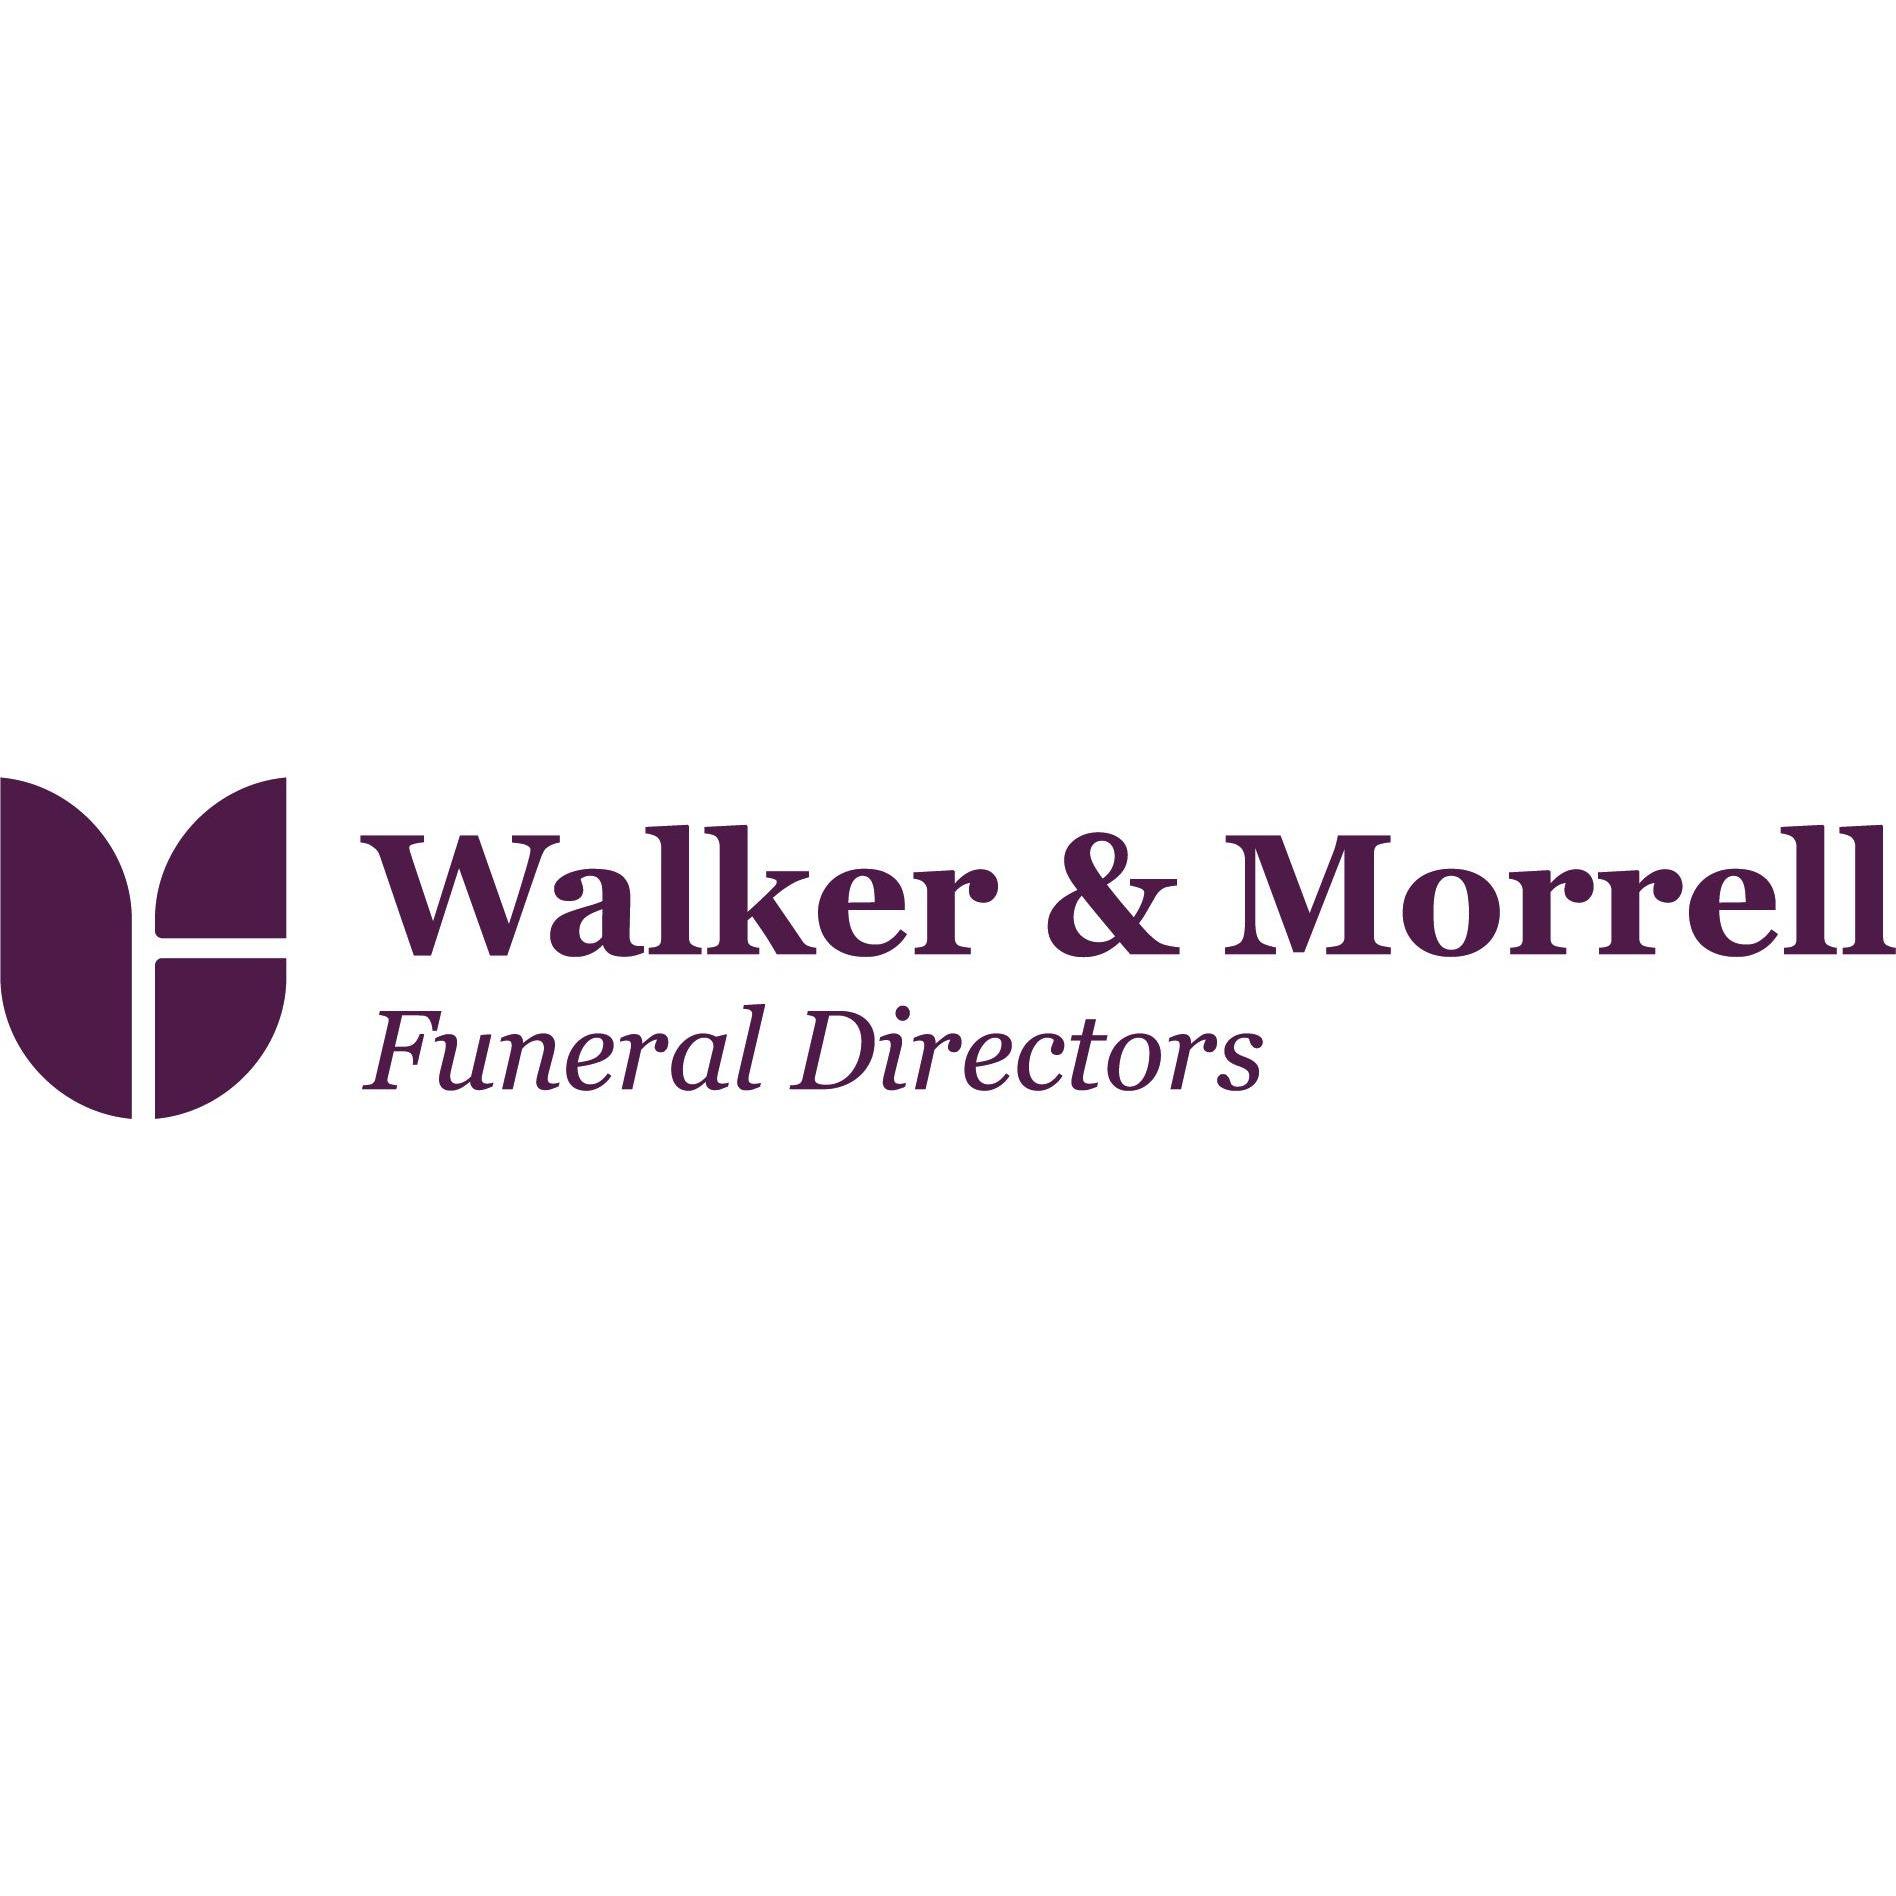 Walker & Morrell Funeral Directors - Washington, Tyne and Wear NE37 2DT - 01913 386812 | ShowMeLocal.com